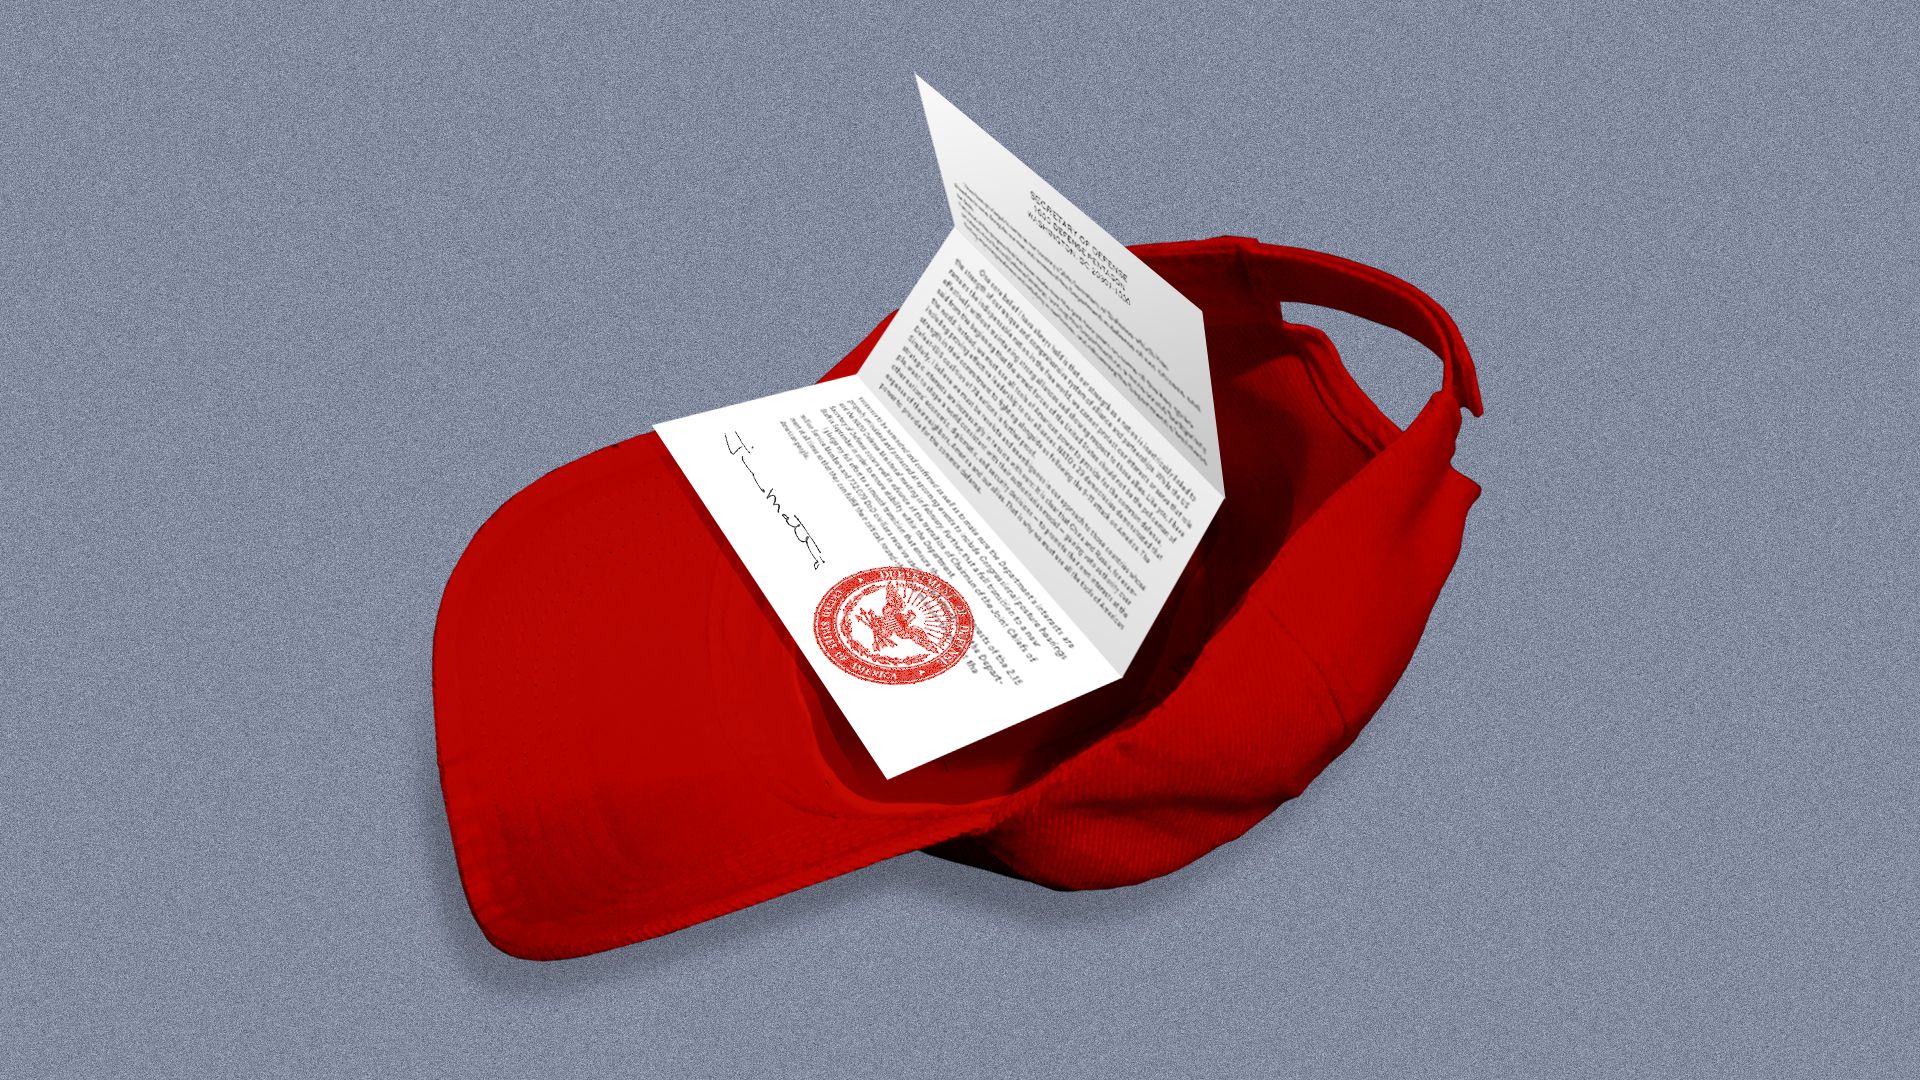 Illustration of Defense Secretary James Mattis' resignation letter in a MAGA hat